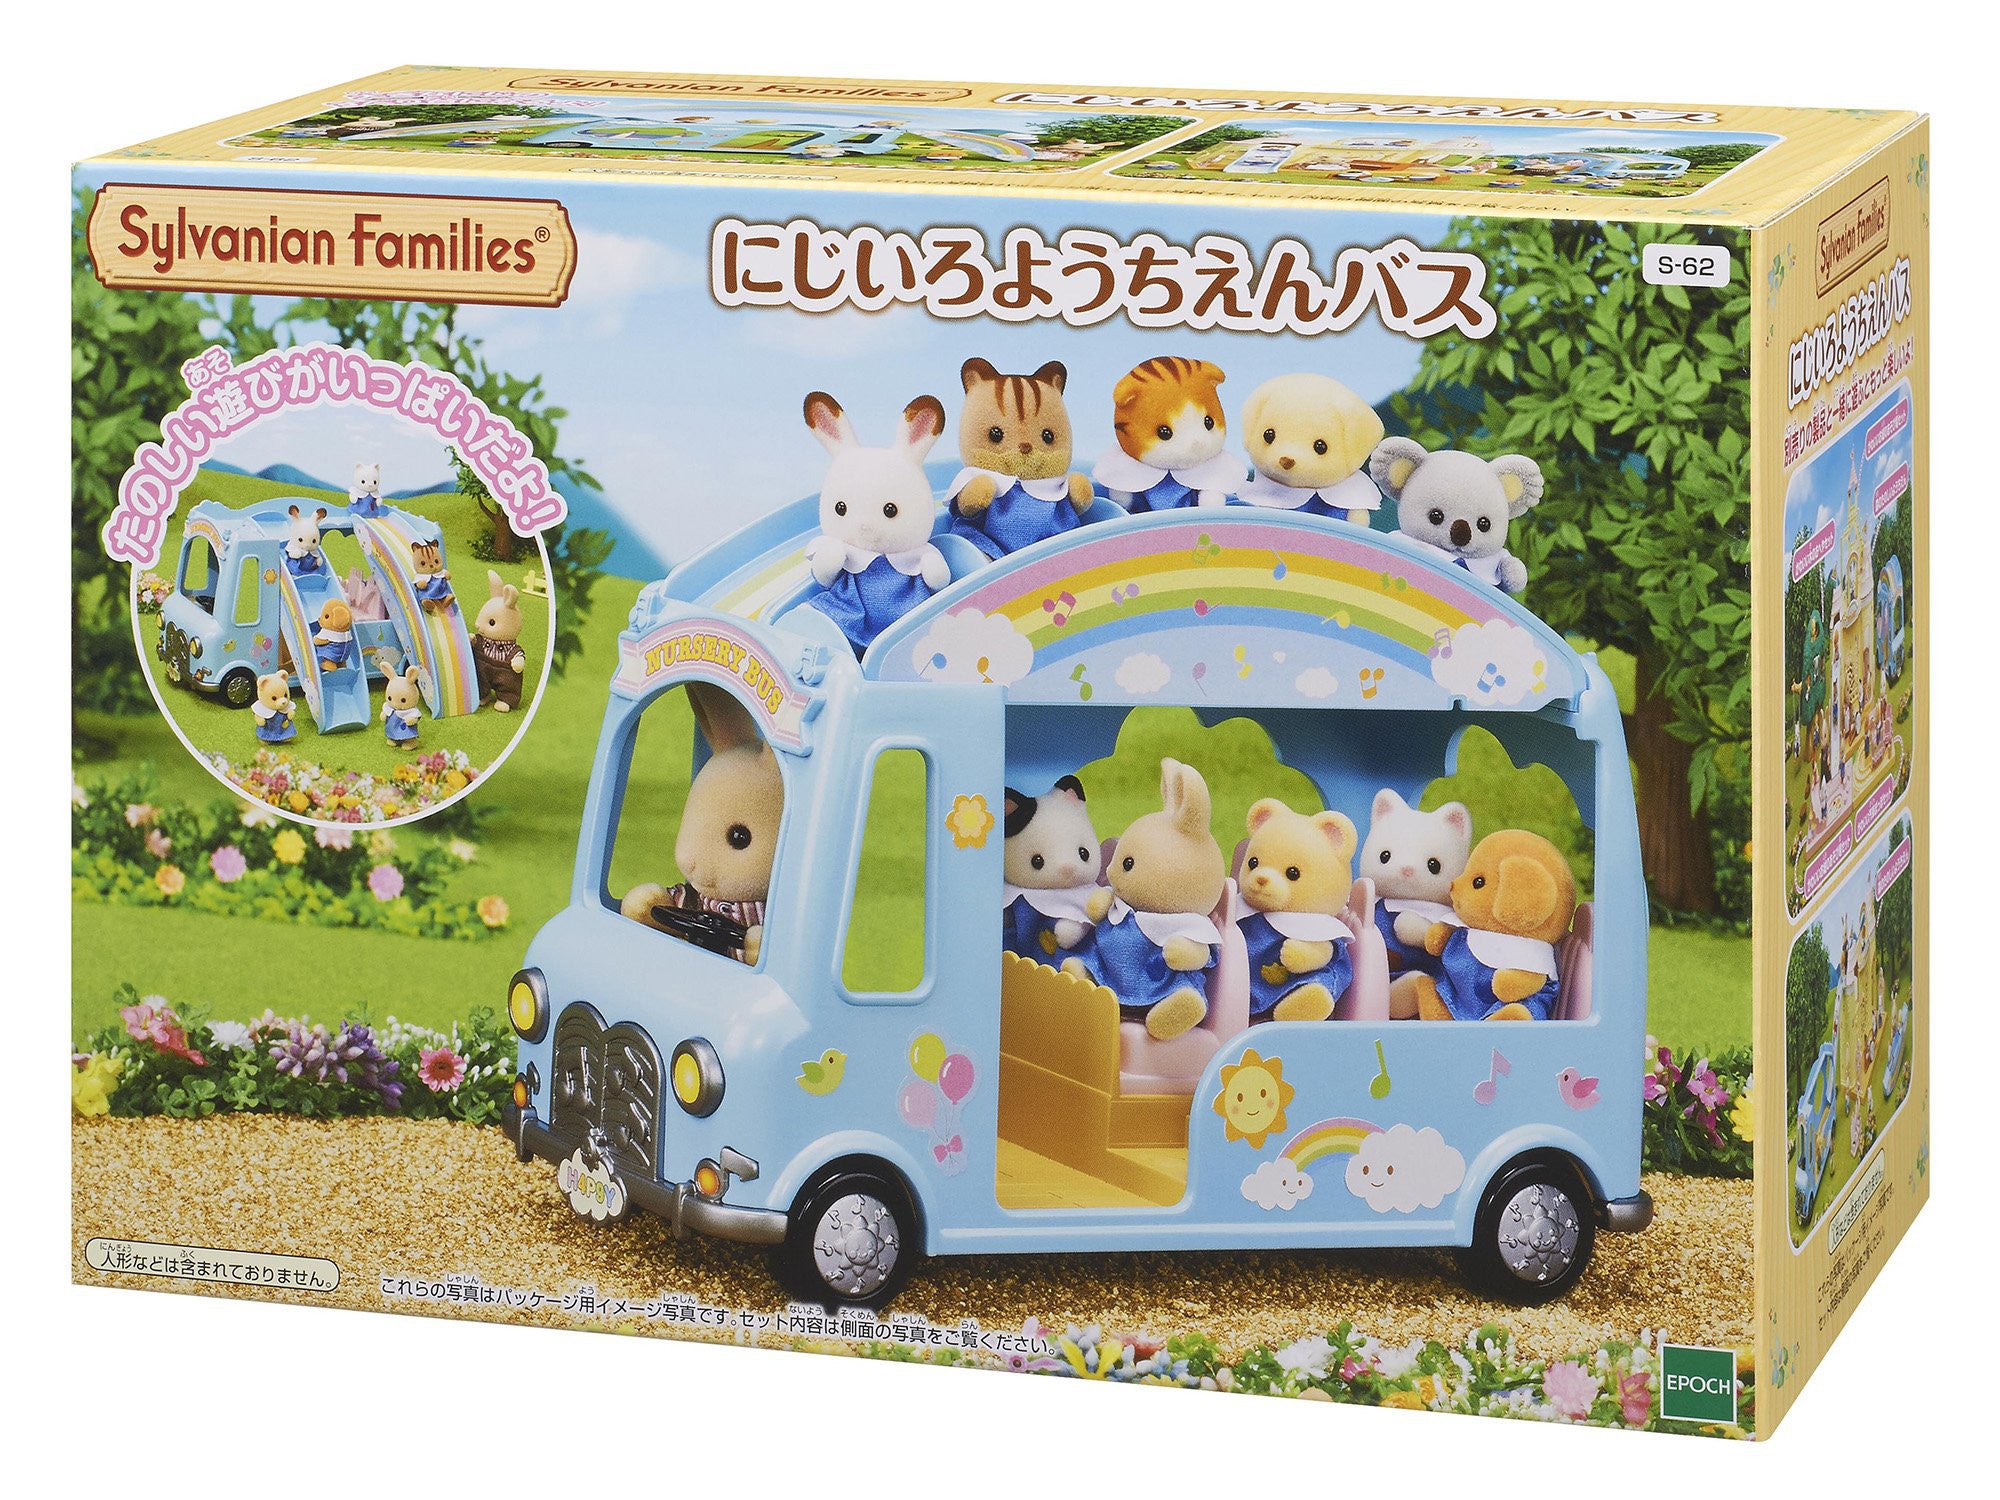 Rainbow Nursery School Bus S-62 Sylvanian Families Japan Calico